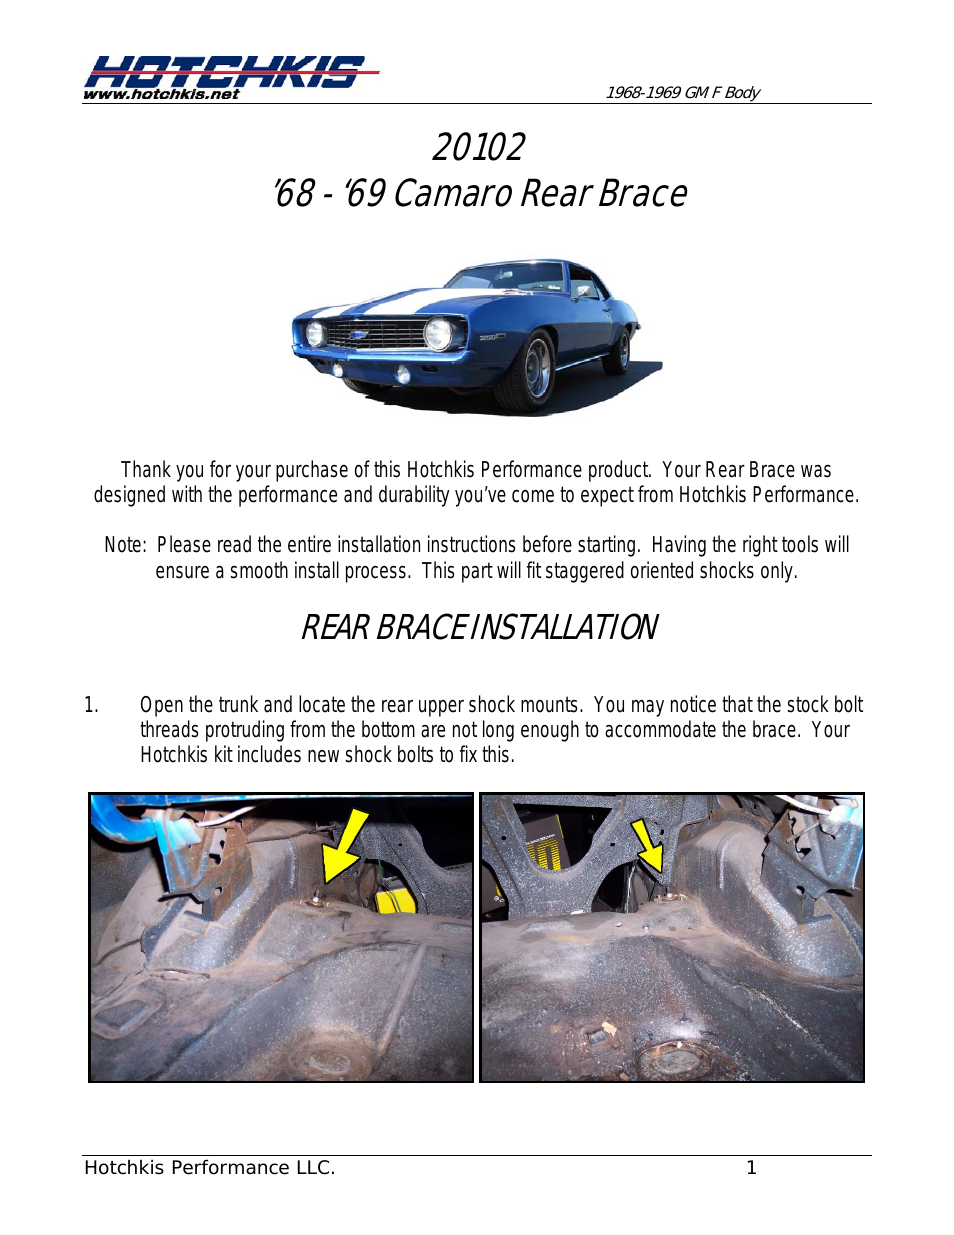 20102 Chassis, Rear Shock Tower Brace, 68-69 Camaro-Firebird F-Body